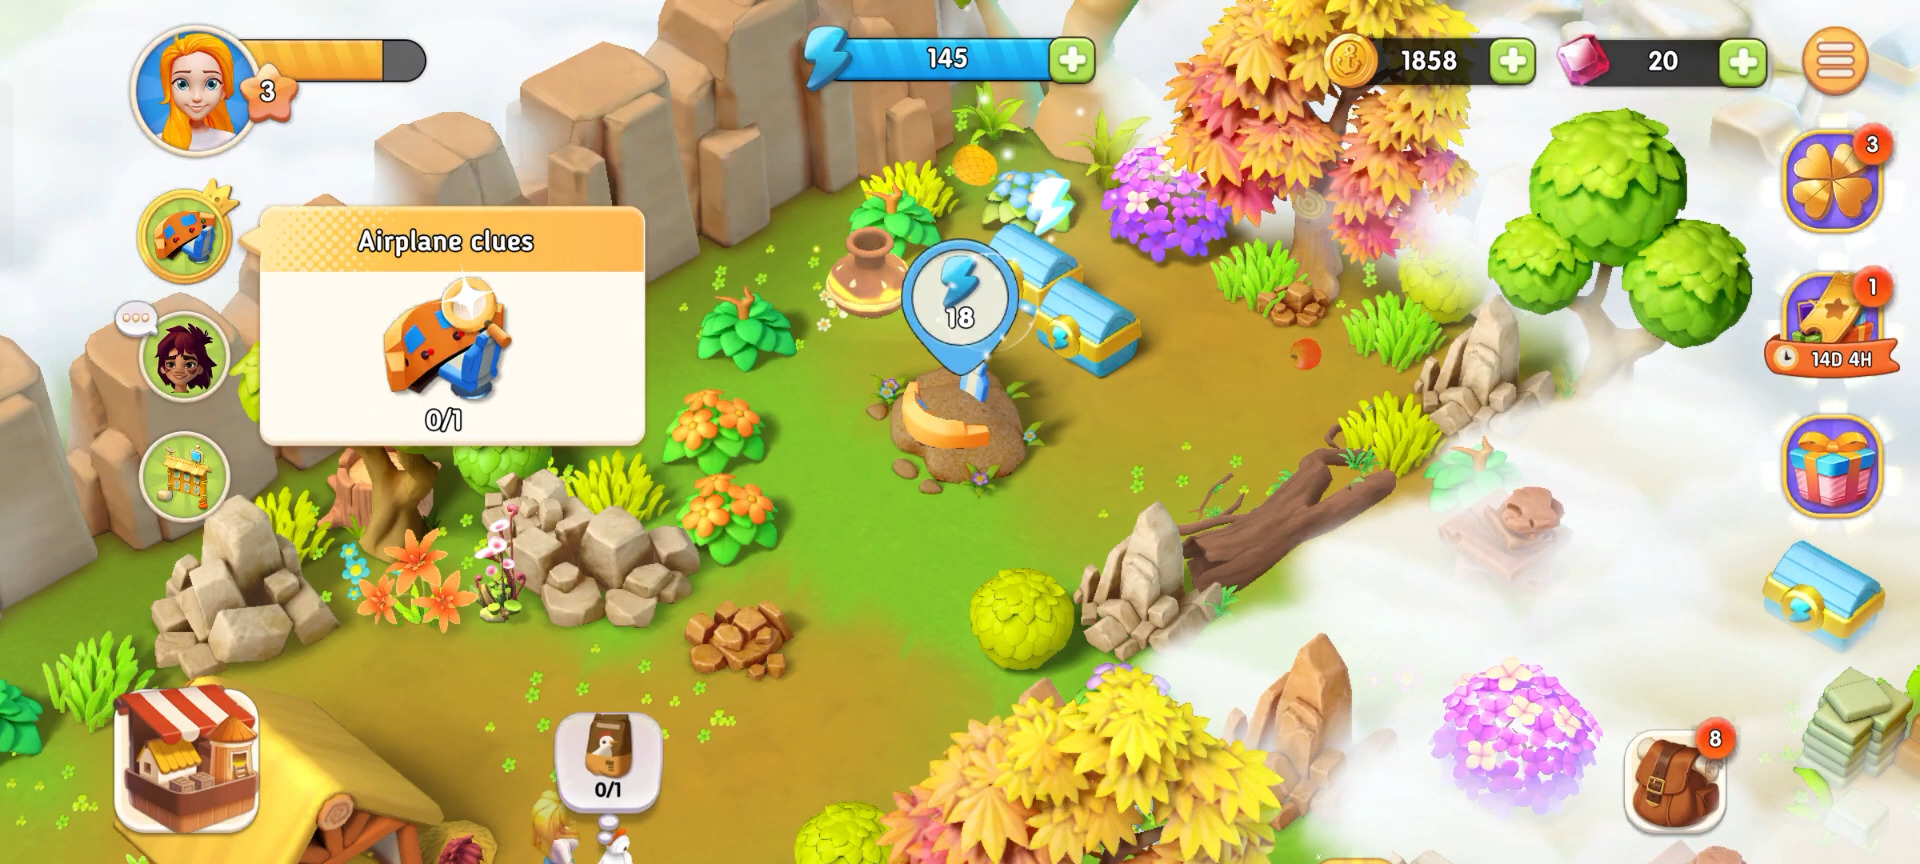 Island Farm Adventure - Android game screenshots.